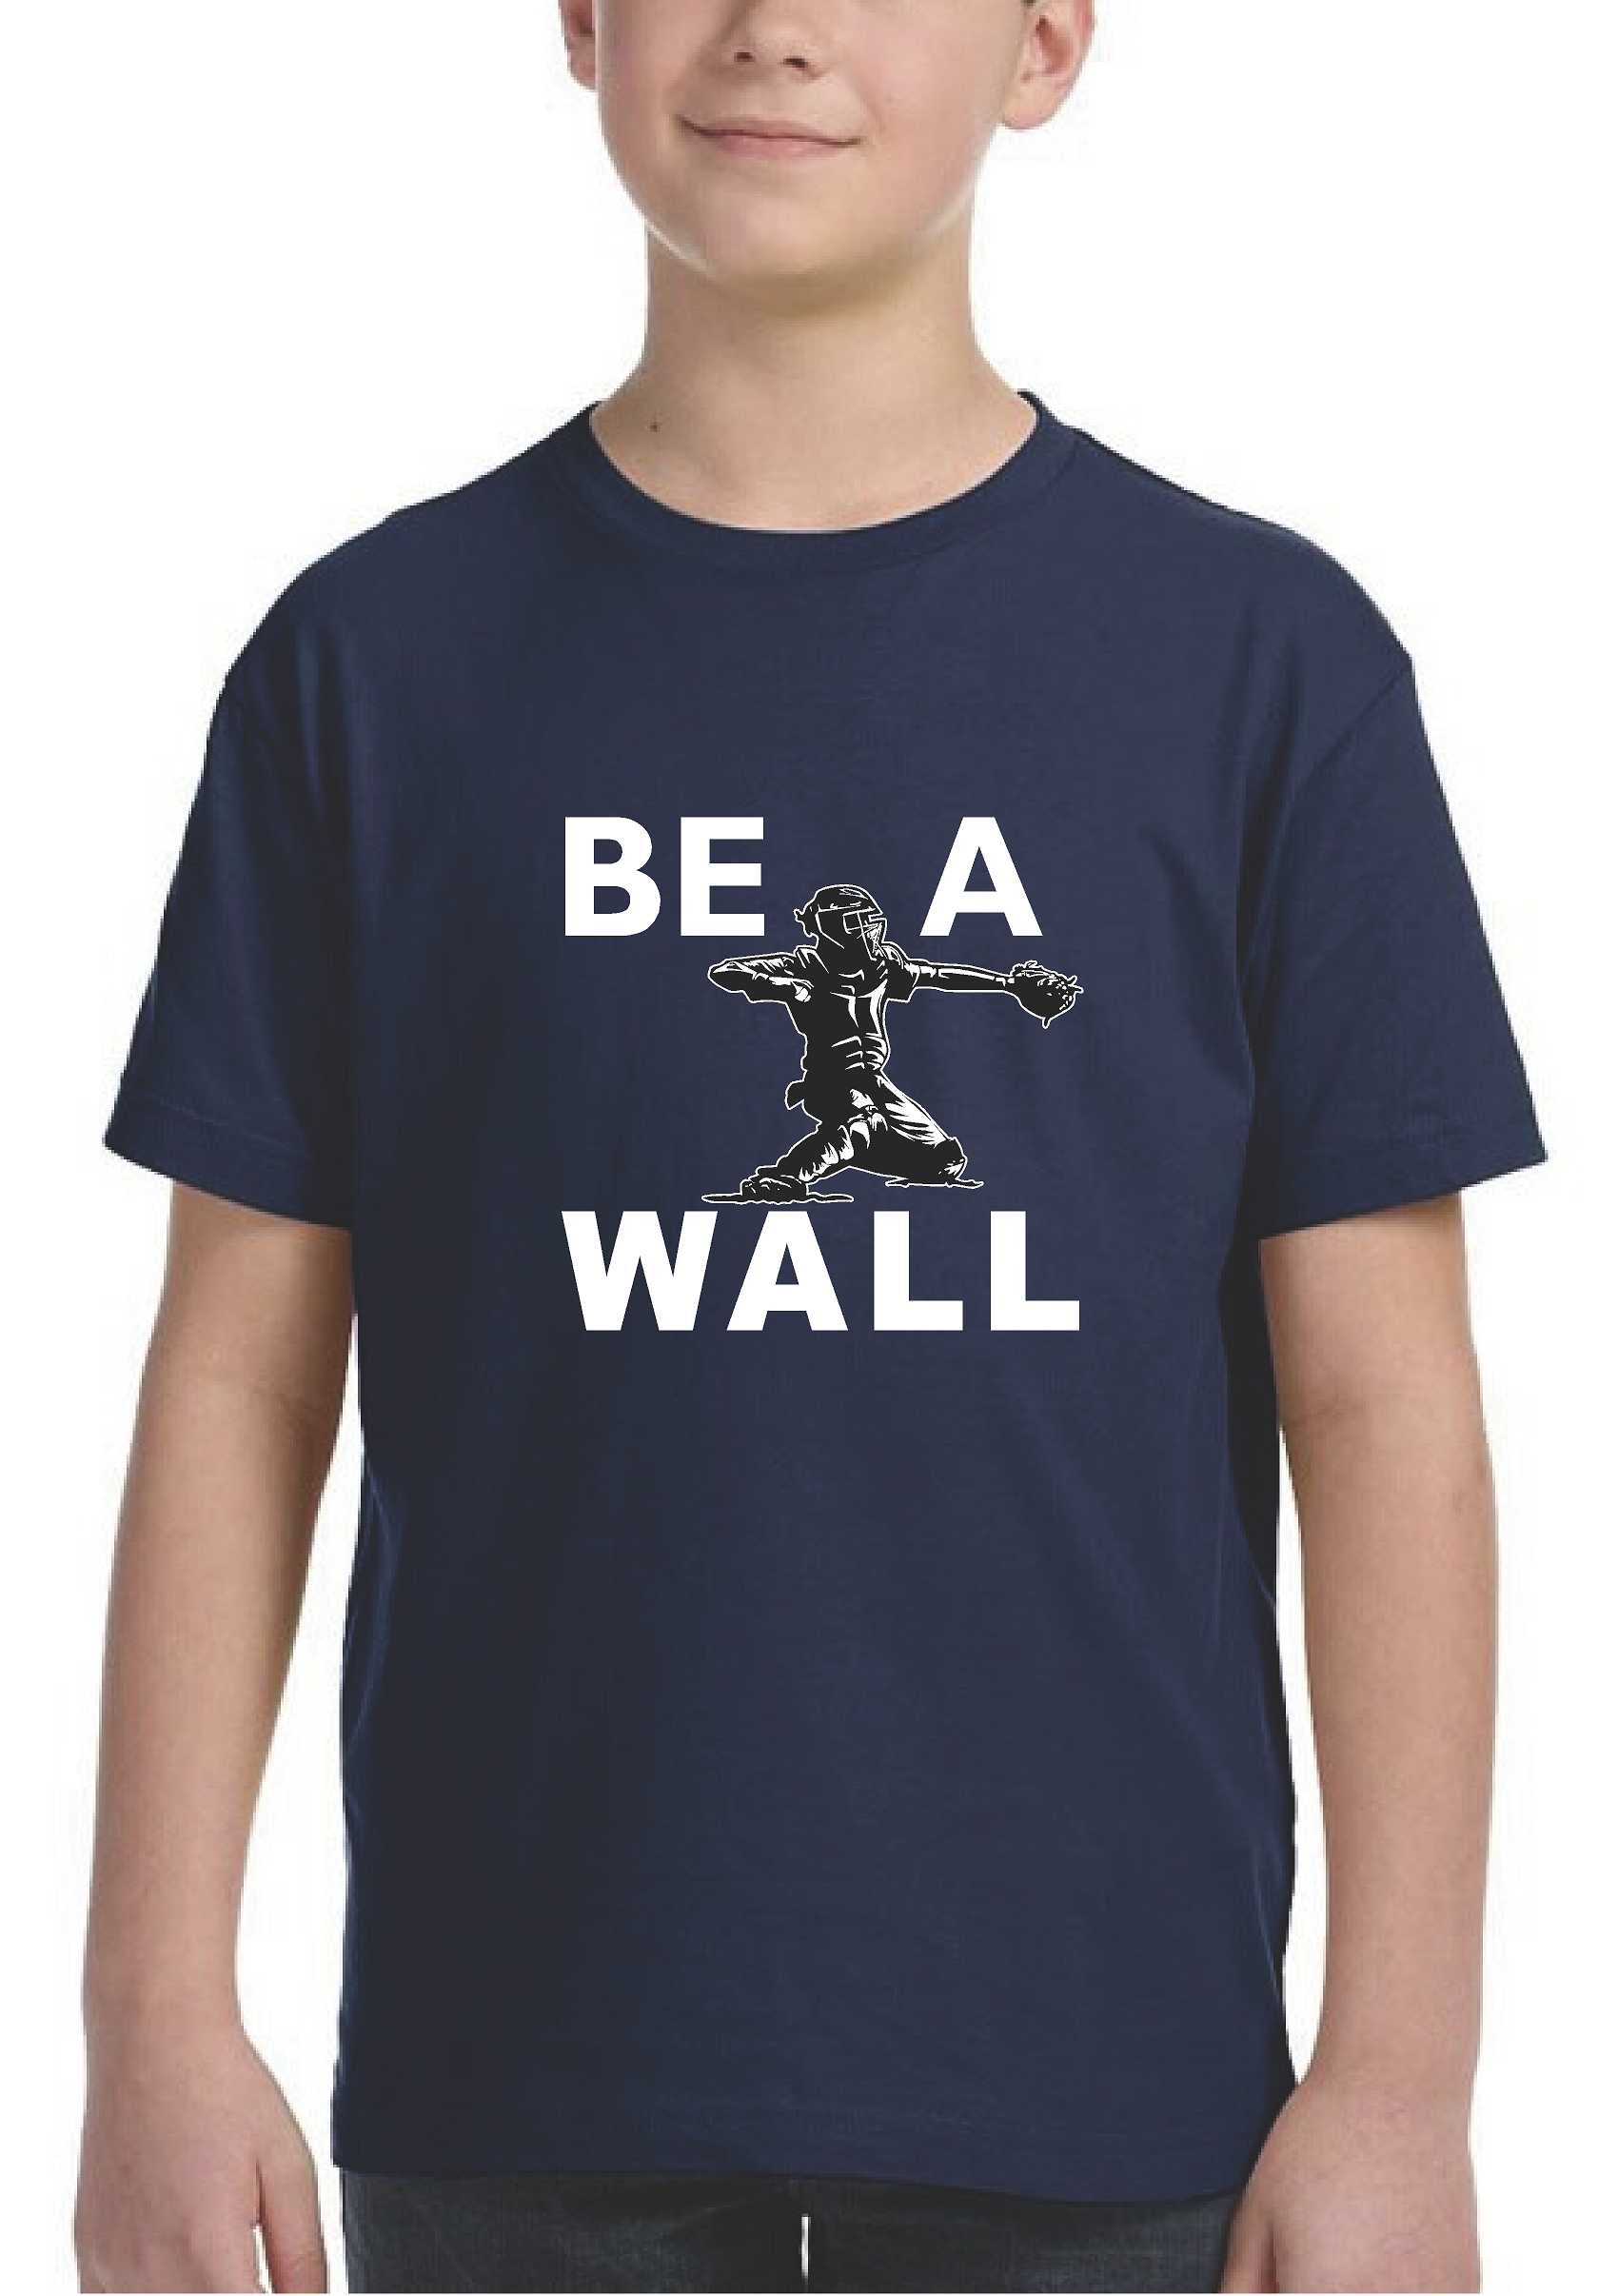 Be A Wall Boys Sports Shirt, Youth Baseball Tee Black / S